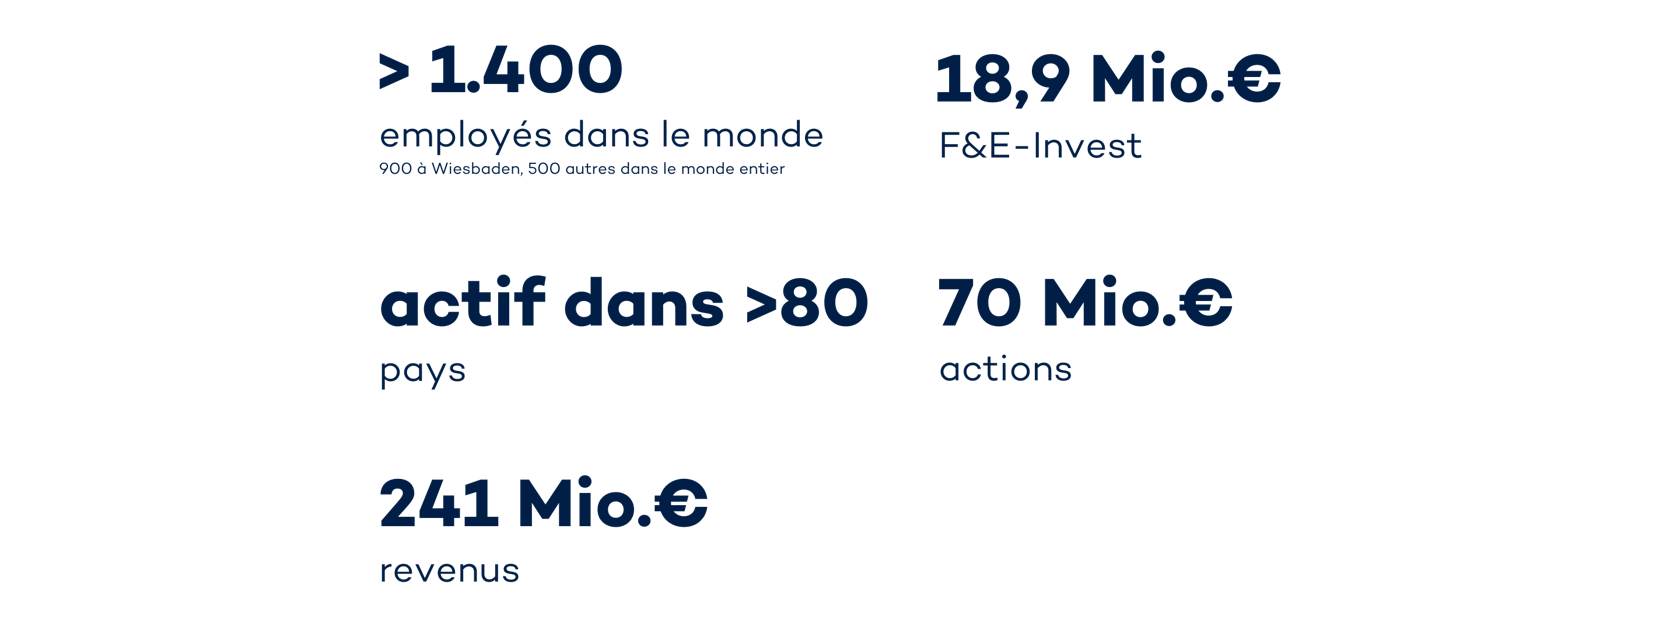 VITRONIC en chiffres (business year 2022)